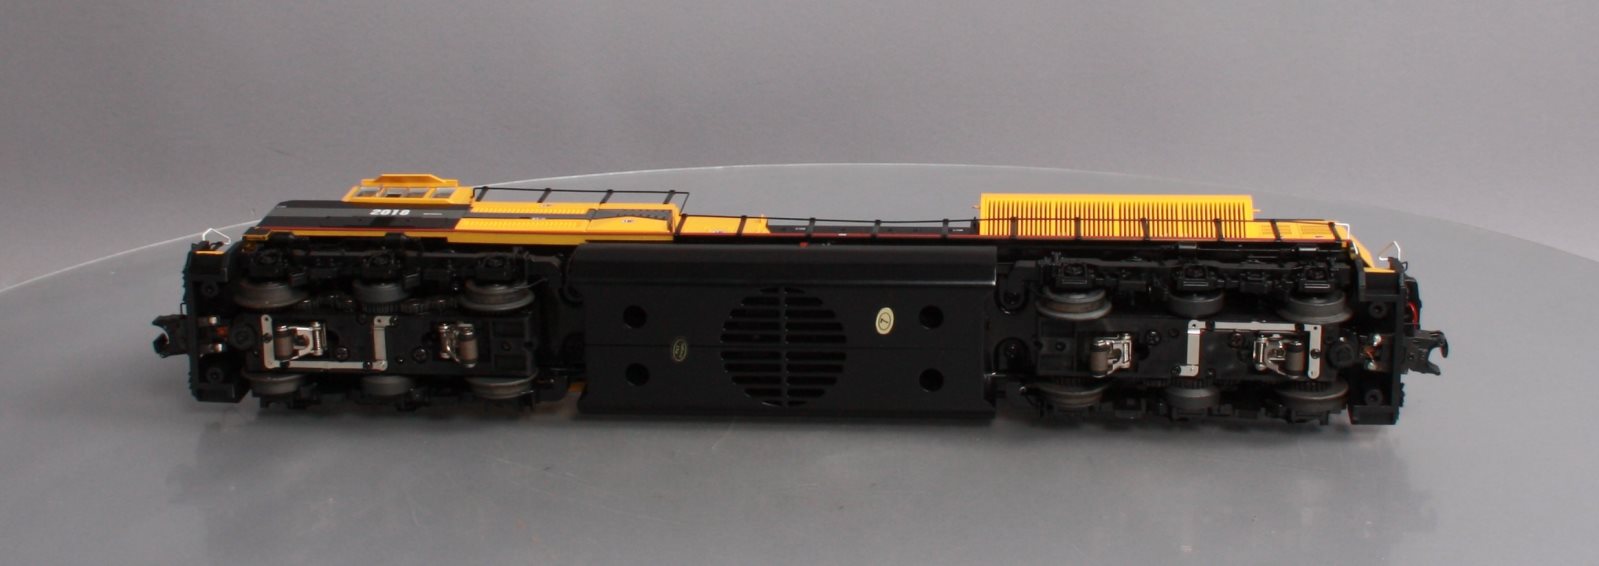 MTH 20-20215-1 Caterpillar SD70ACe Diesel Engin w/PS 3.0 #2012 (Hi-Rail Wheels)